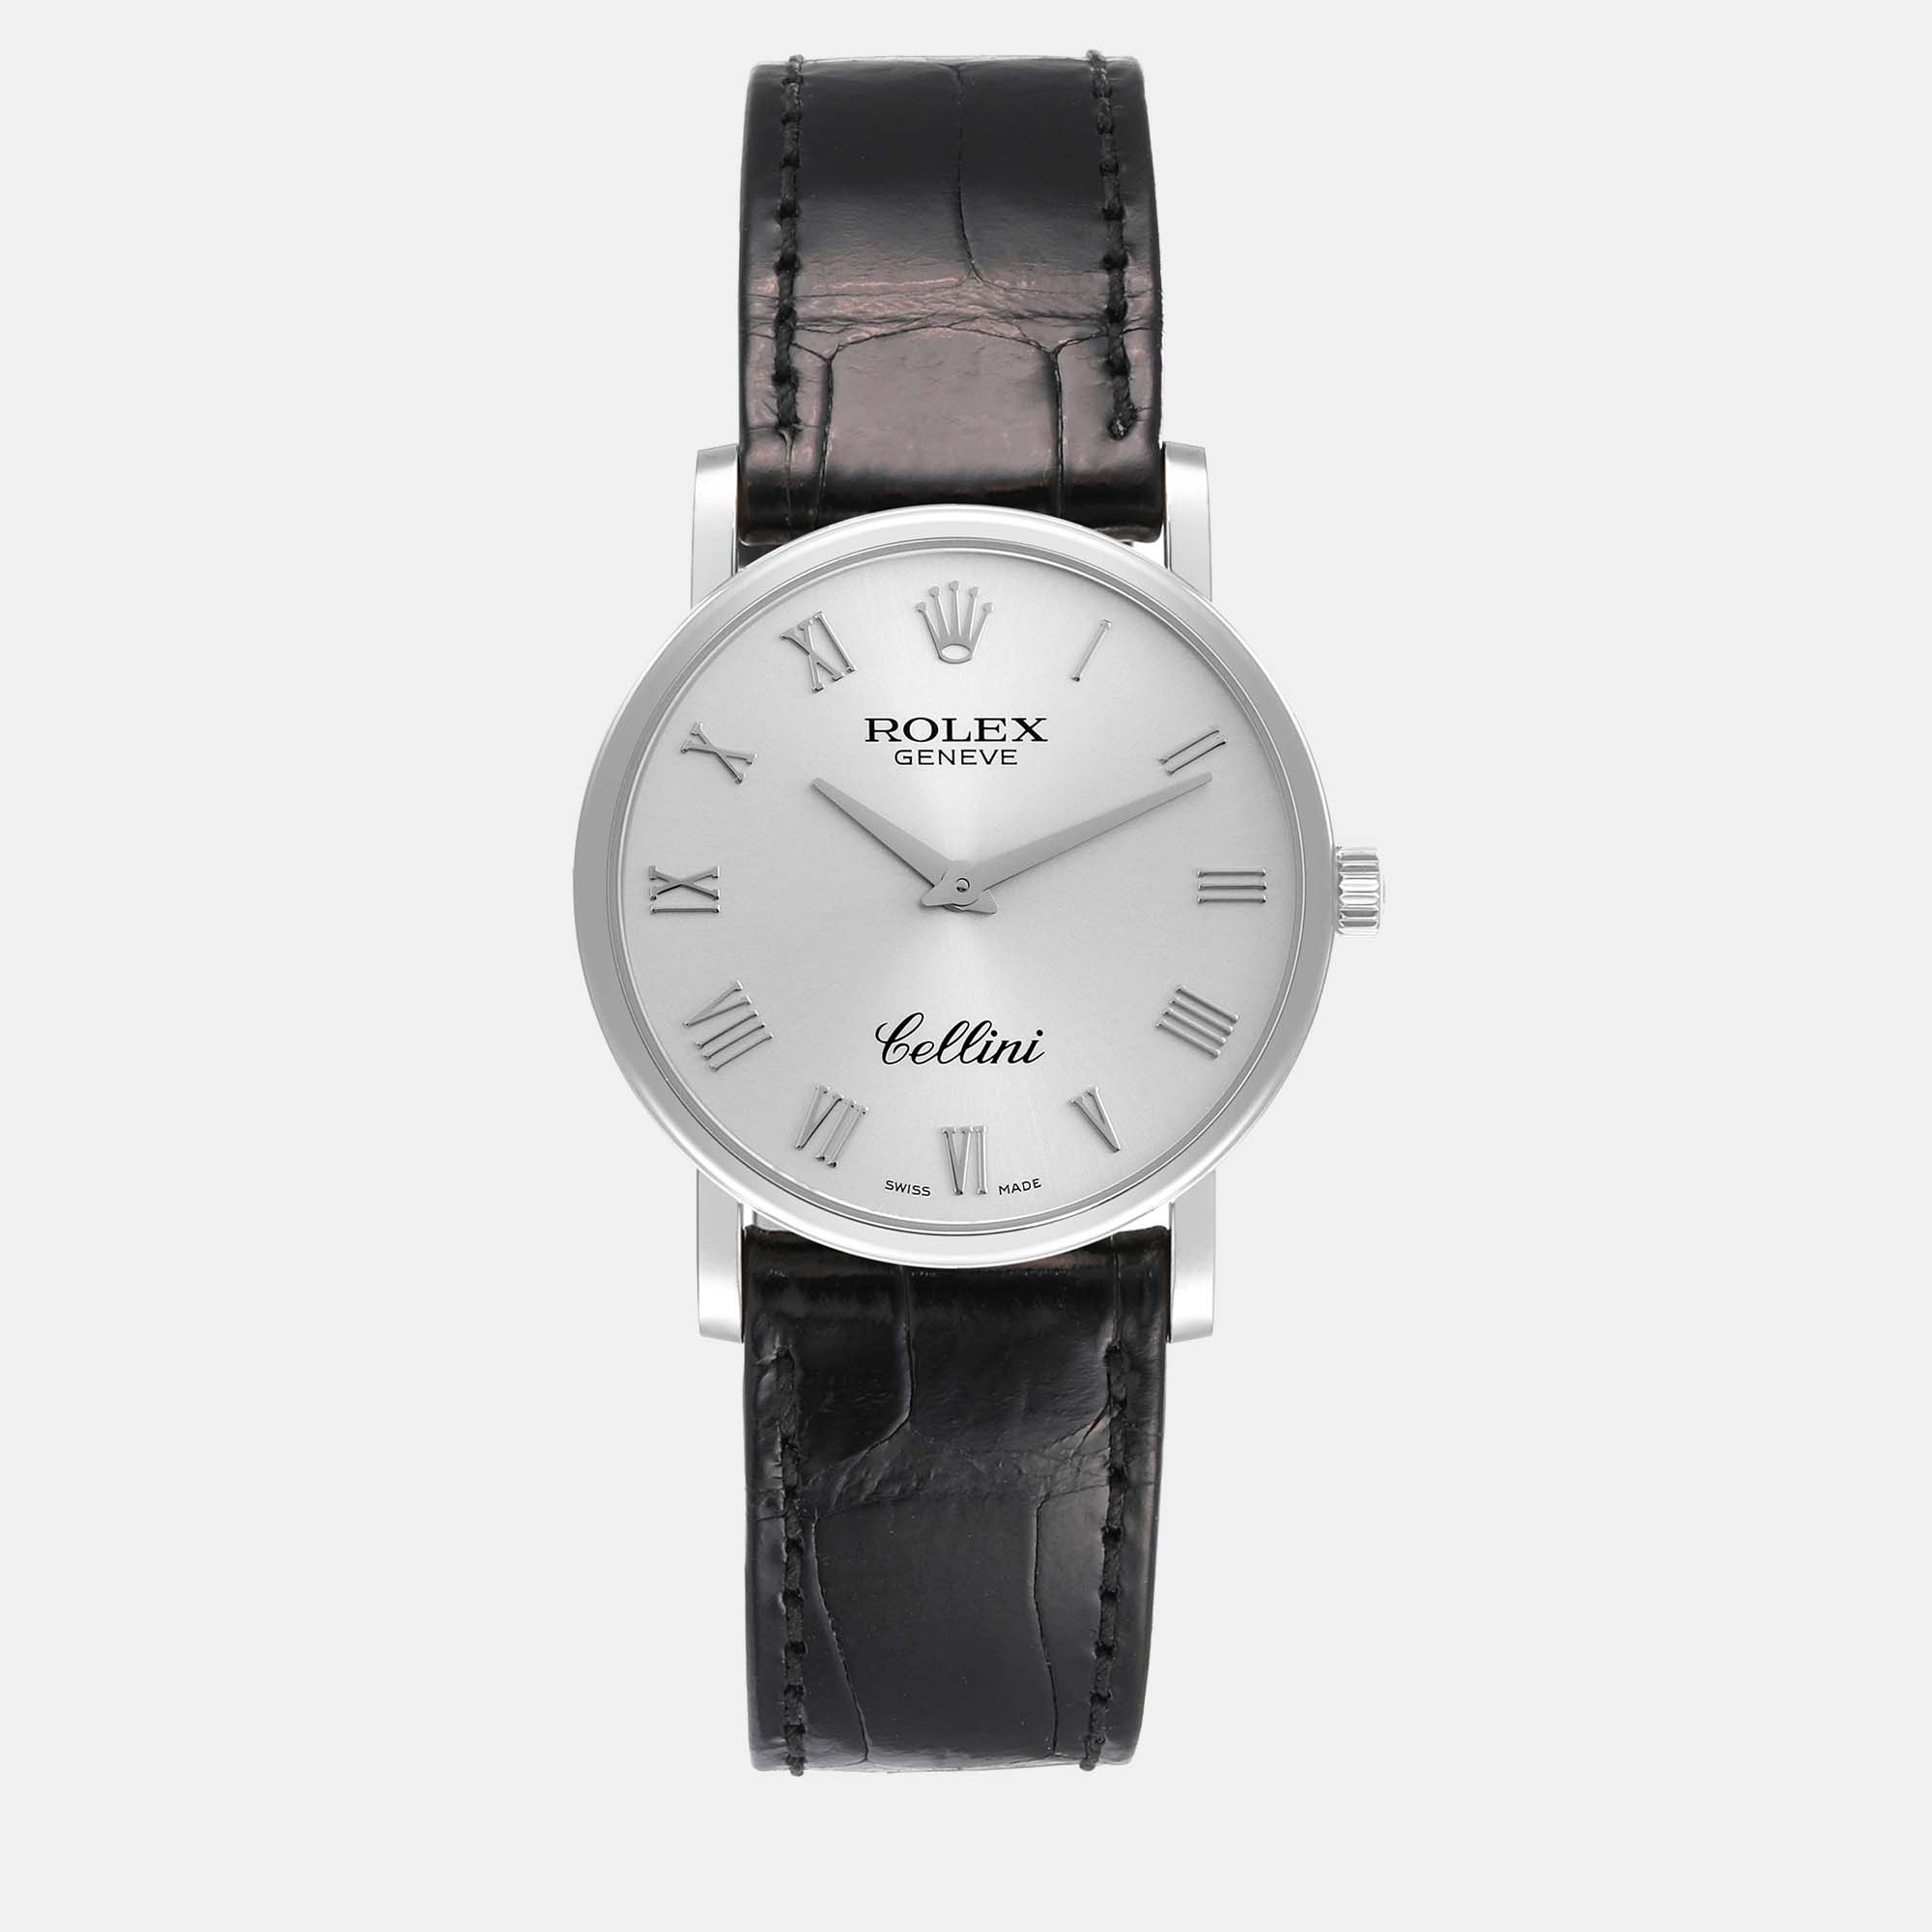 

Rolex Cellini Classic White Gold Silver Dial Men's Watch